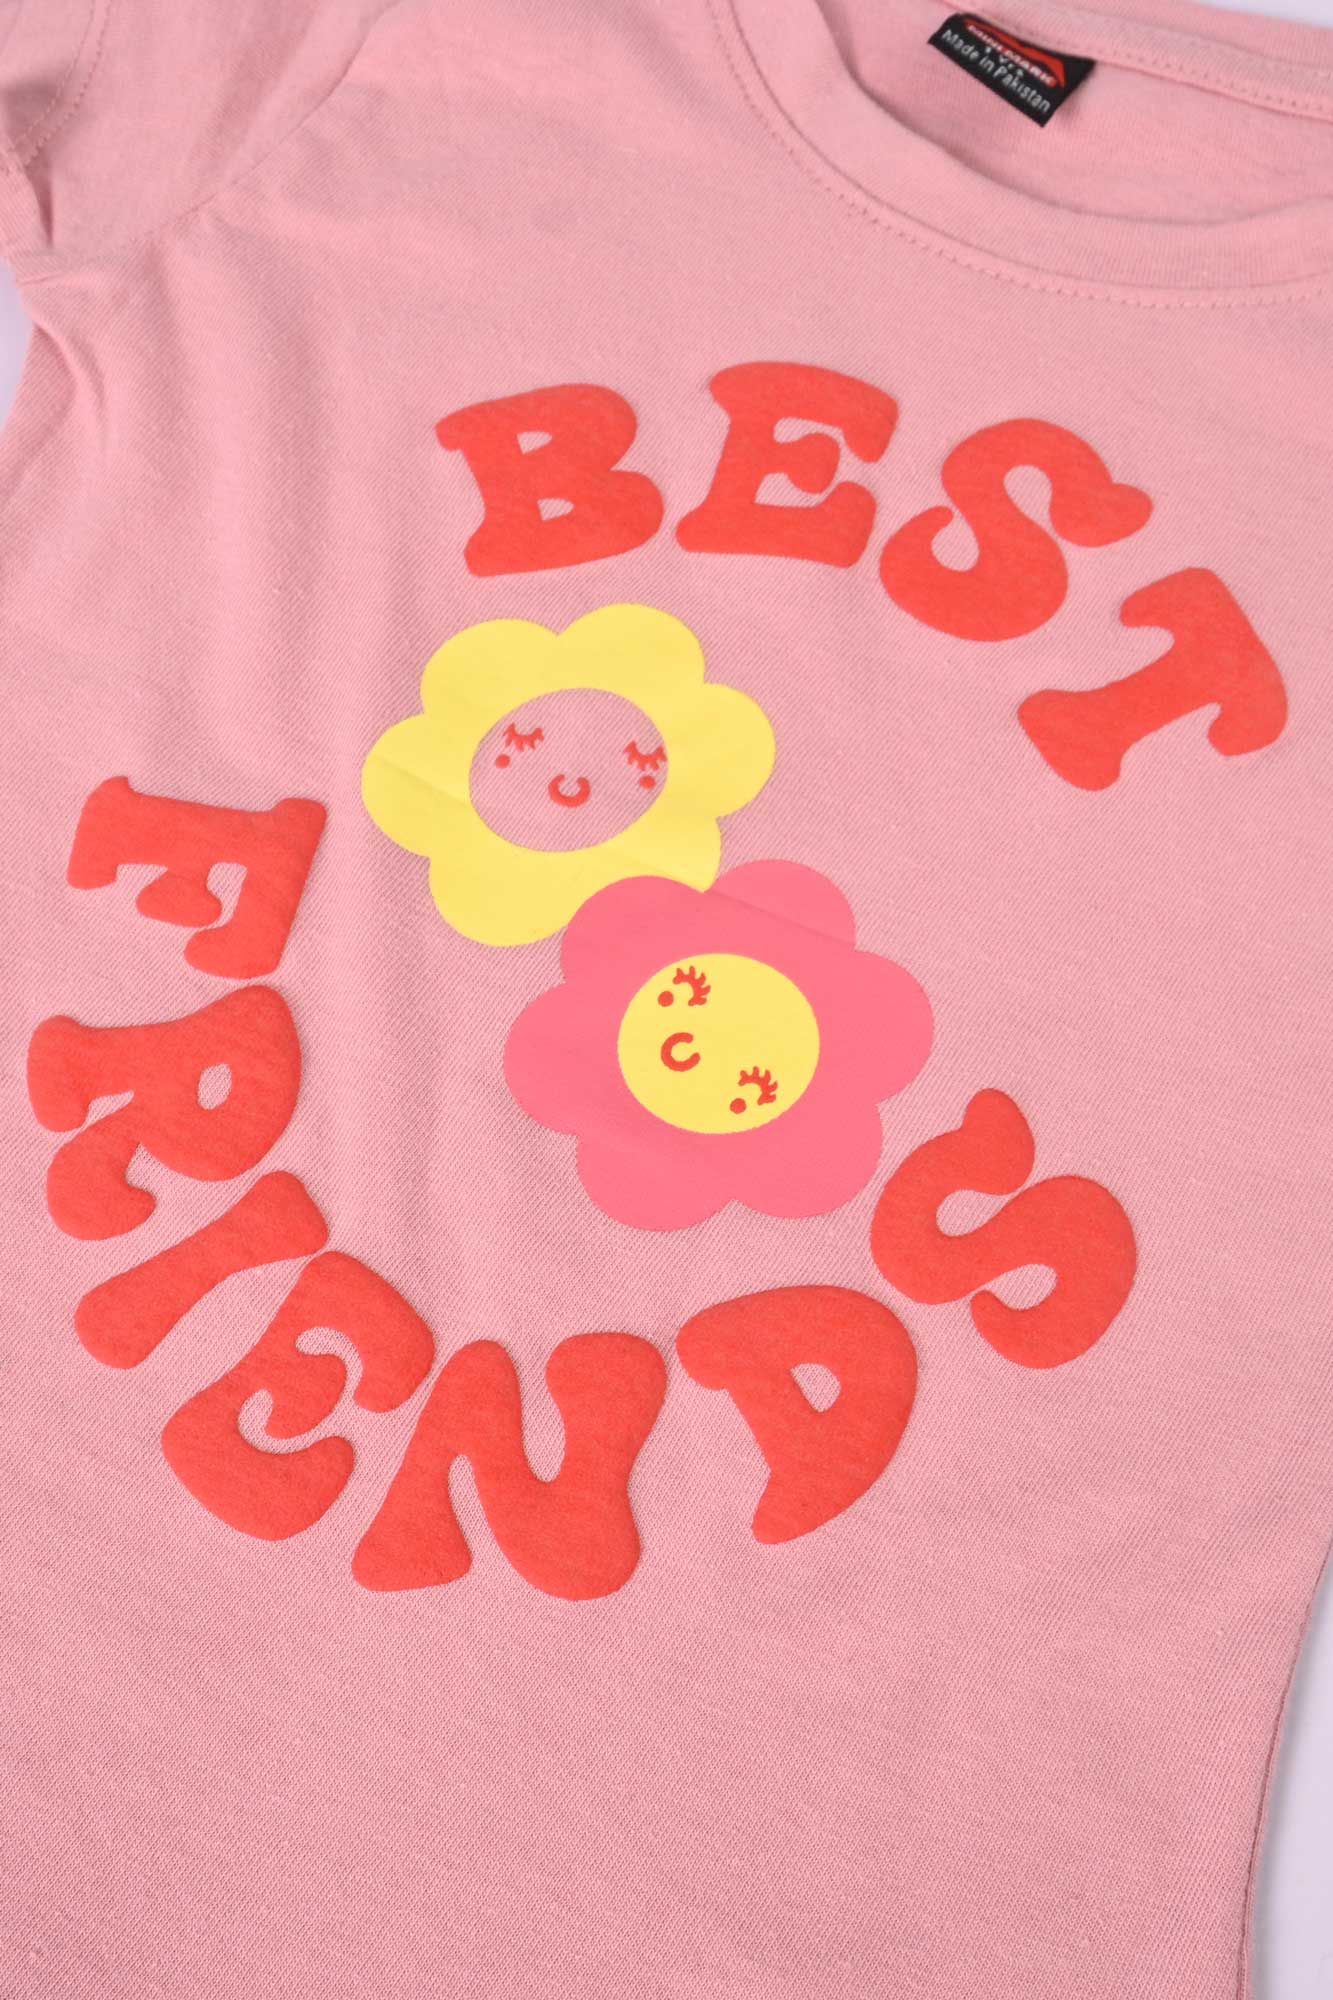 Mini Mark Kid's Best Friends Printed Short Sleeve Tee Shirt Boy's Tee Shirt KMG 